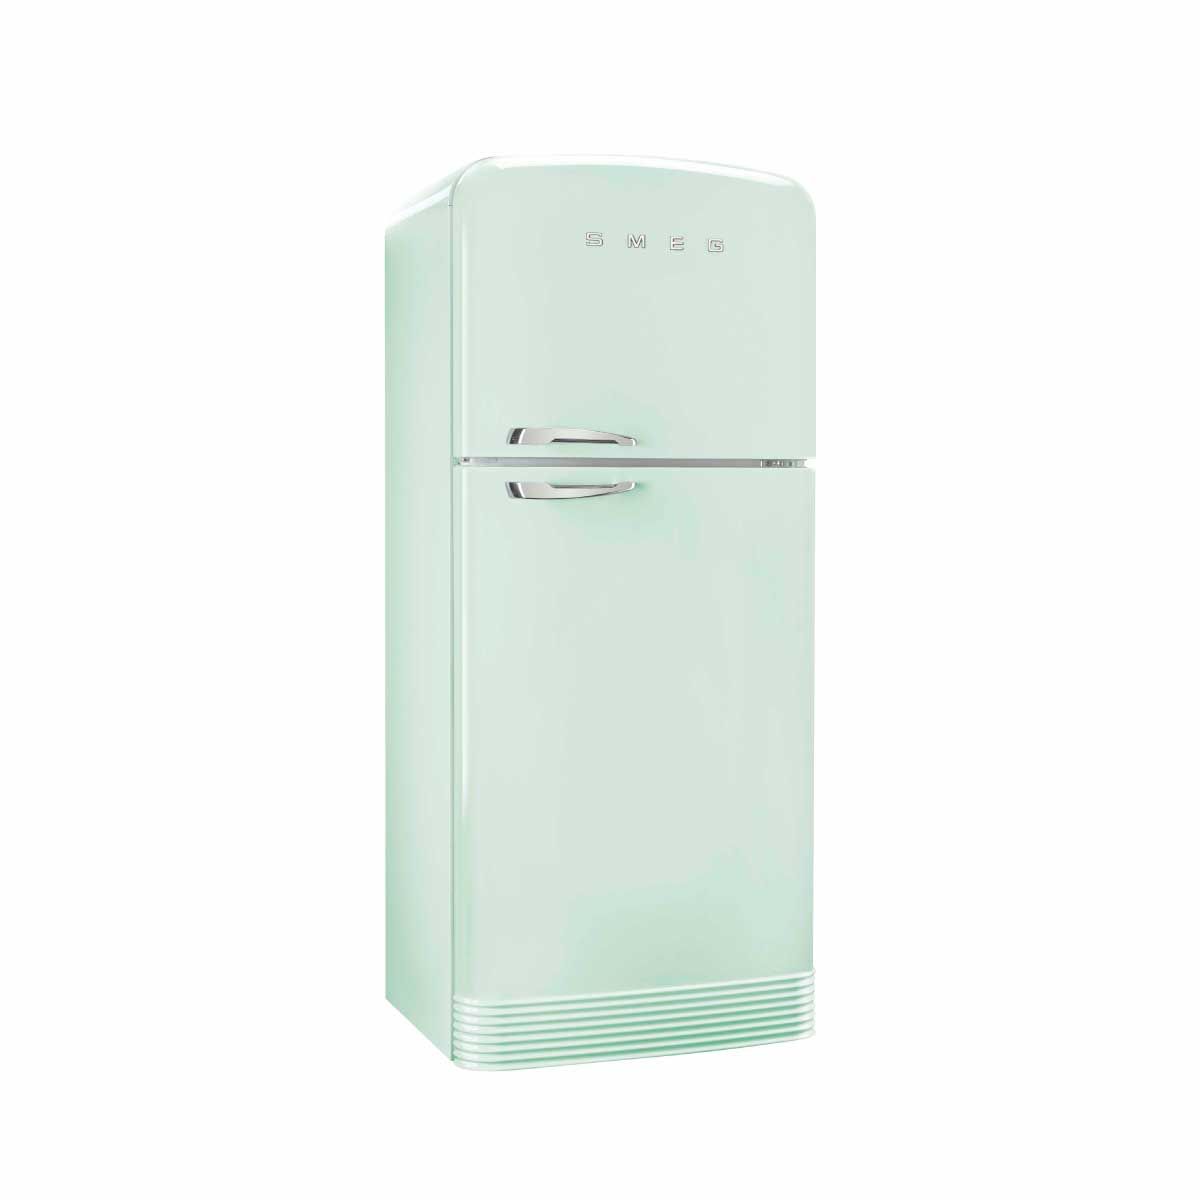 SMEG ตู้เย็น 2 ประตู 16.49 Q.สไตล์ 50  Retro รุ่น FAB50RPG5 สีเขียวพาสเทล